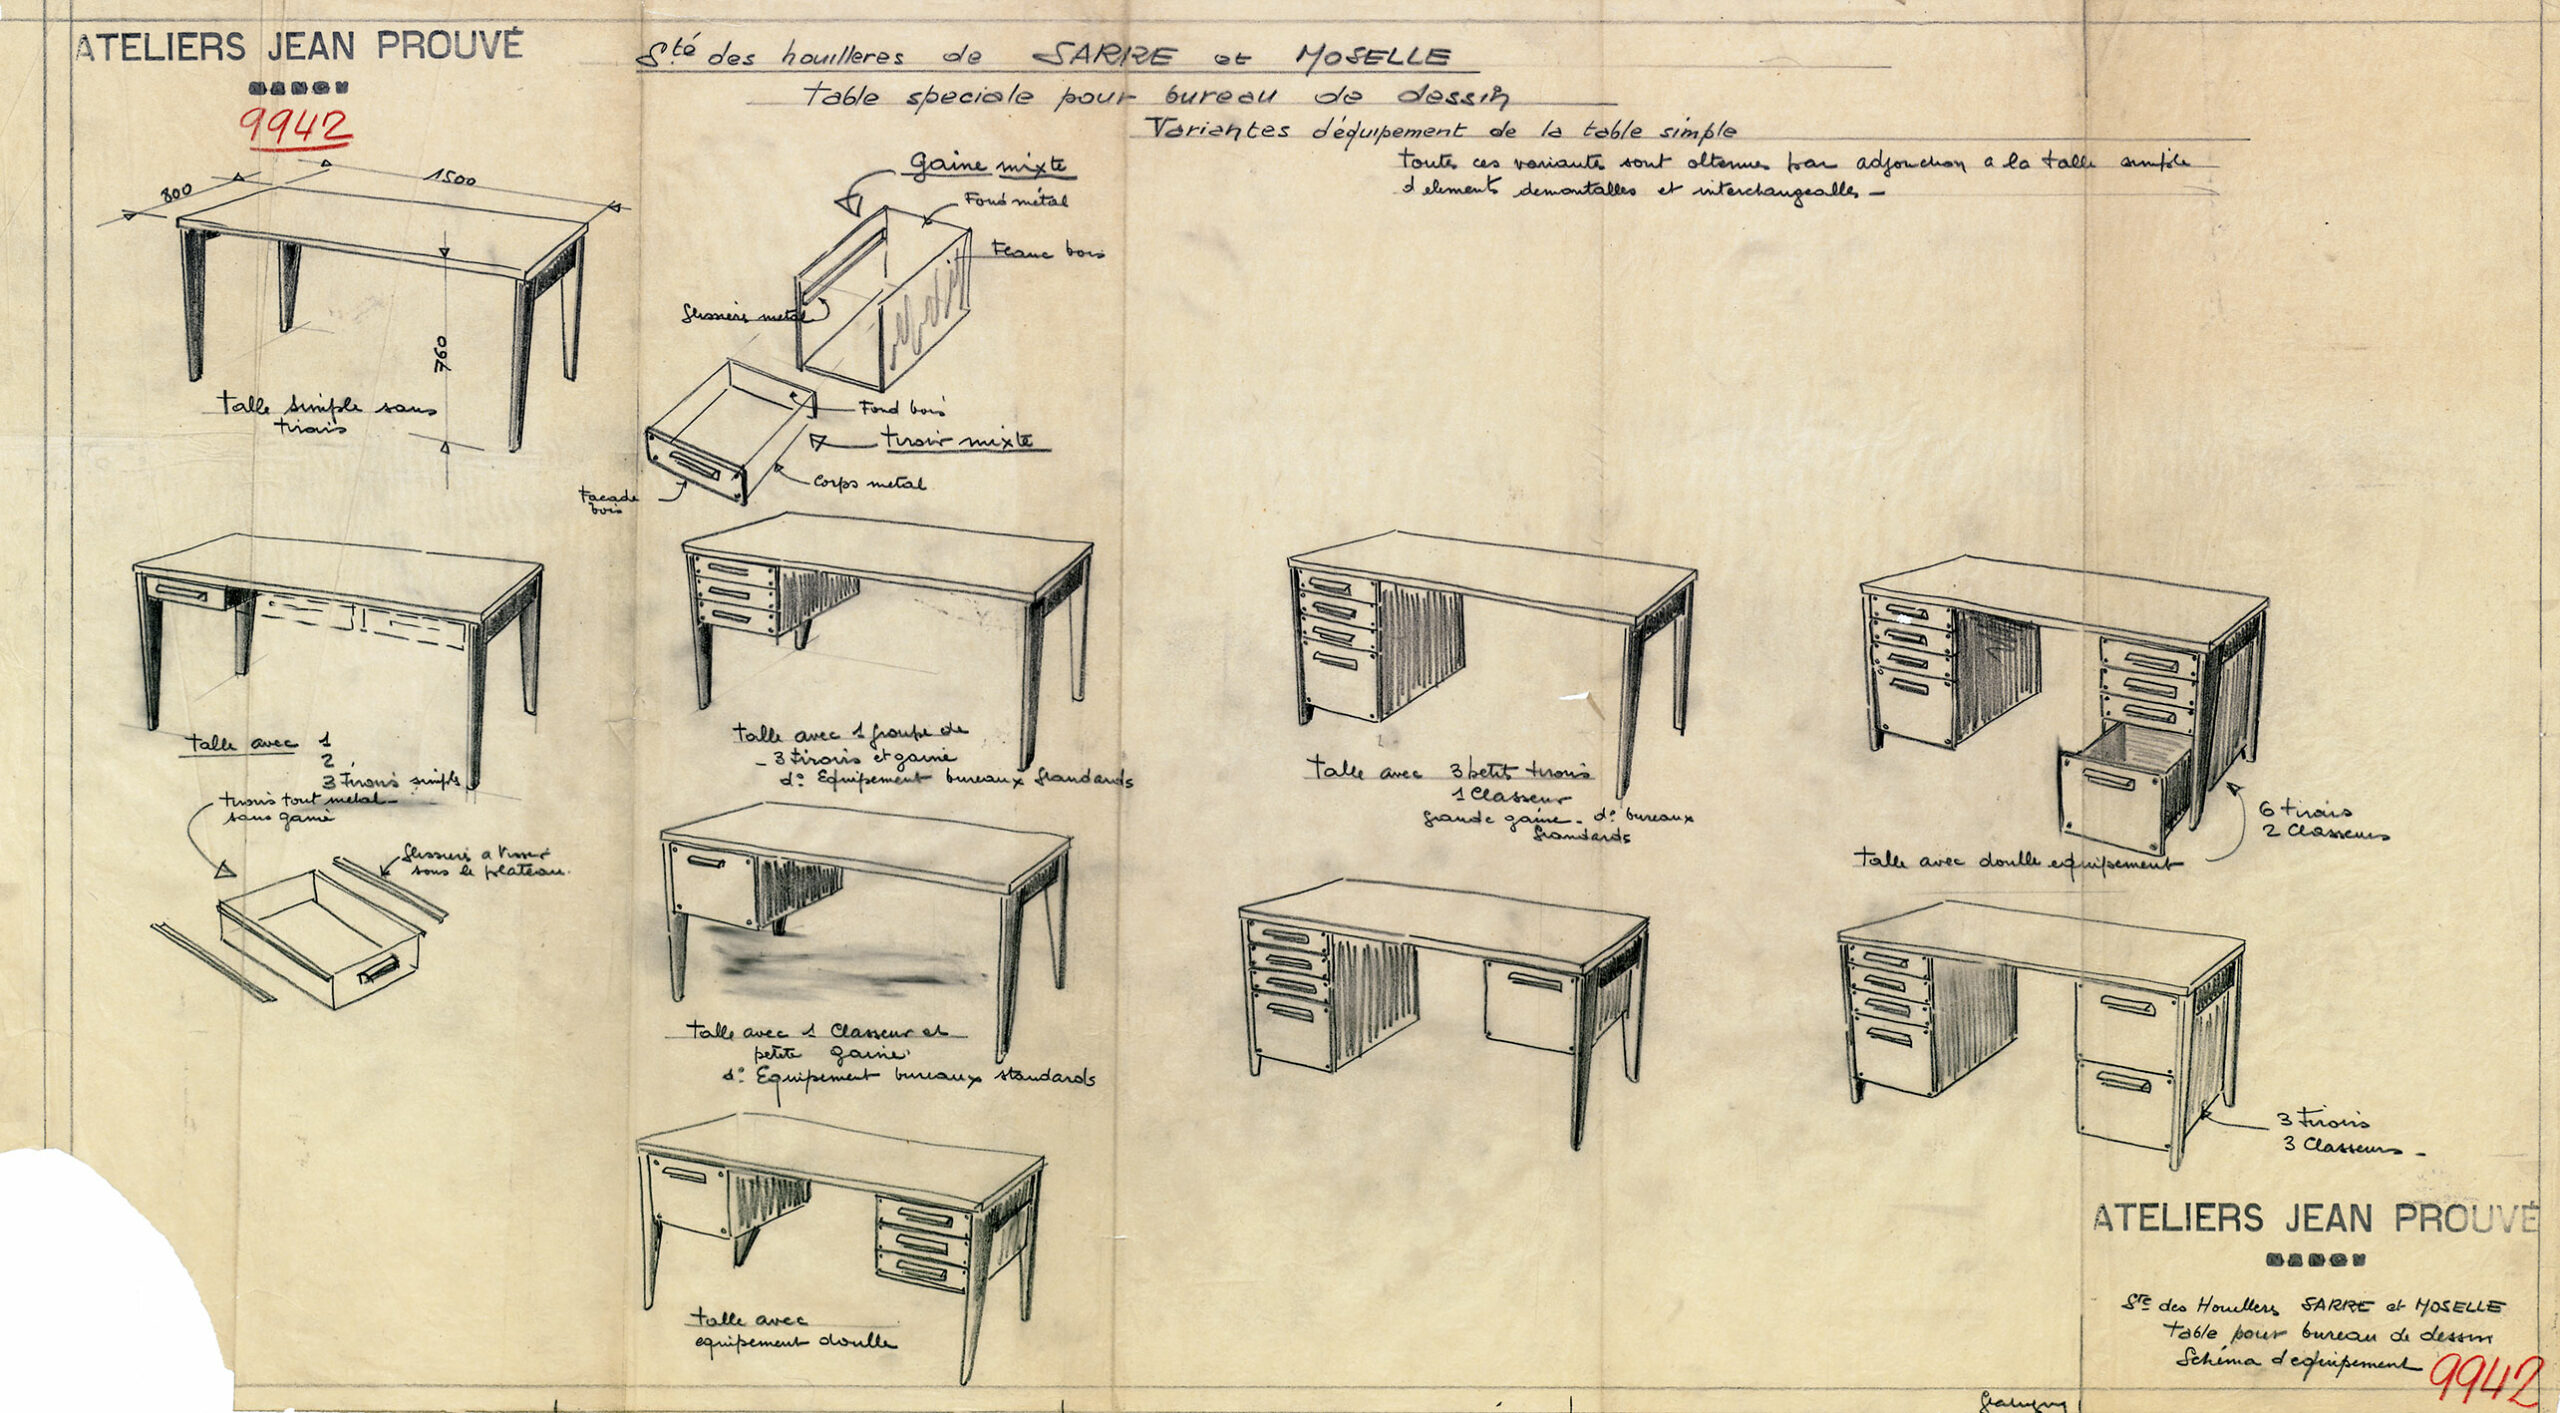 “Houillères de Sarre et Moselle company. Special table-desk for graphic design office”. Ateliers Jean Prouvé drawing no. 9942, 11 April 1946, by J.-M. Glatigny.